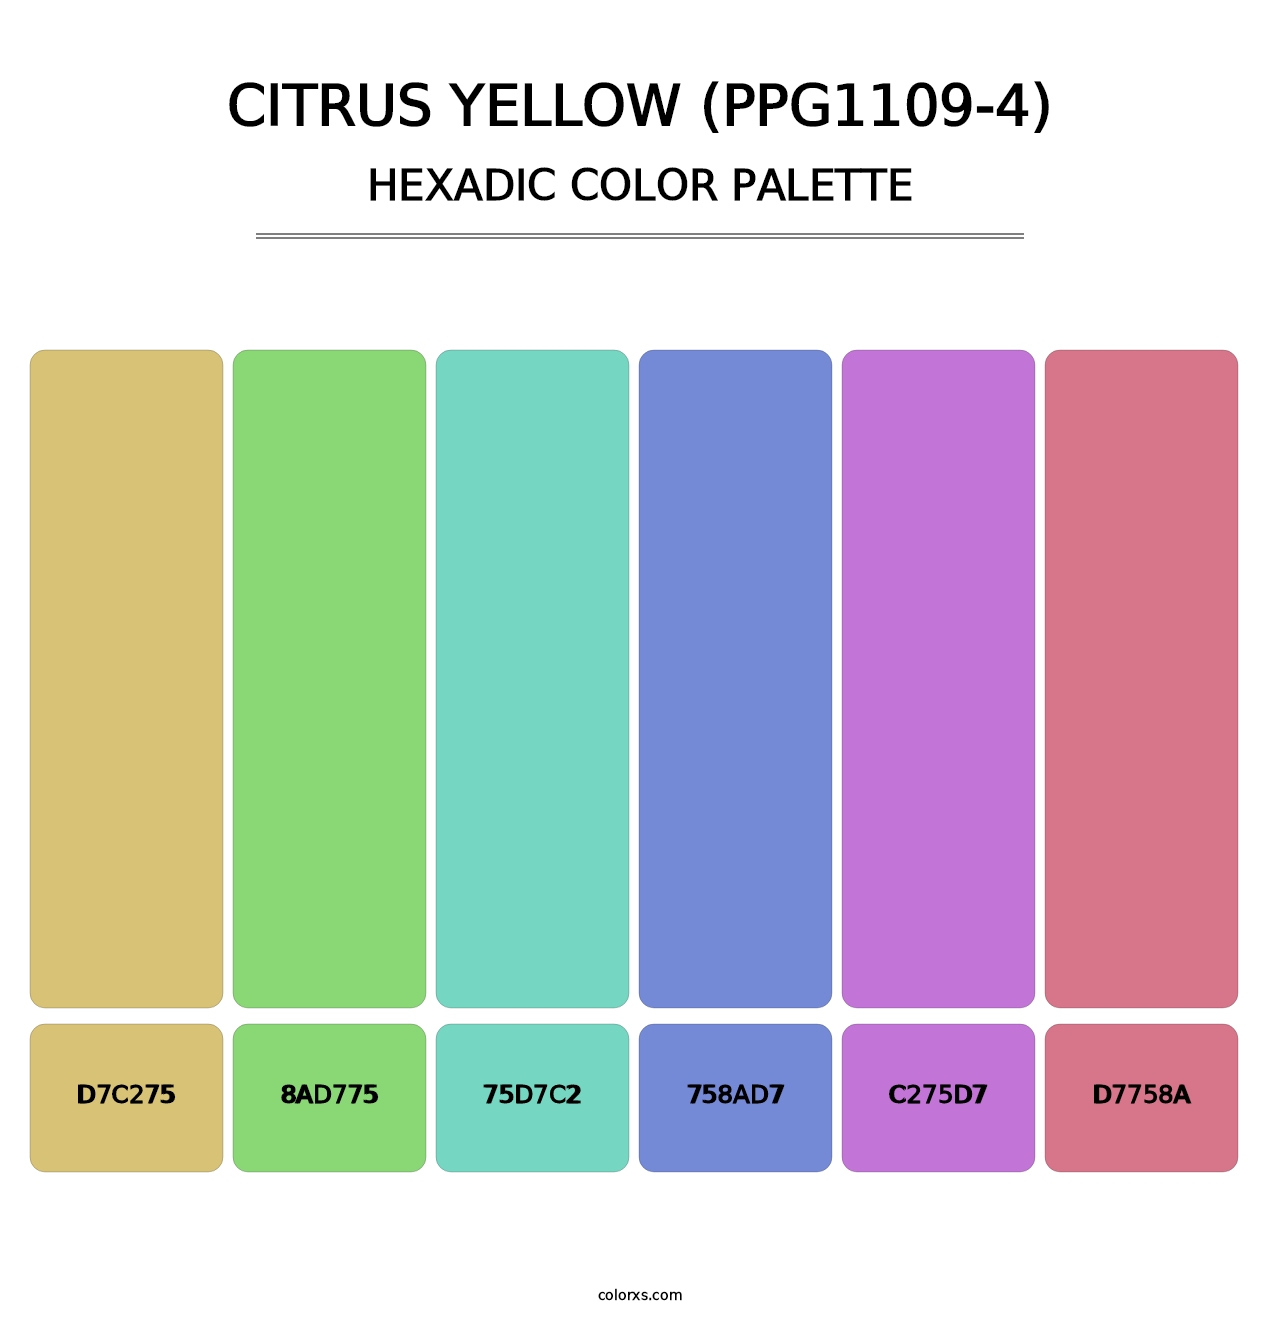 Citrus Yellow (PPG1109-4) - Hexadic Color Palette